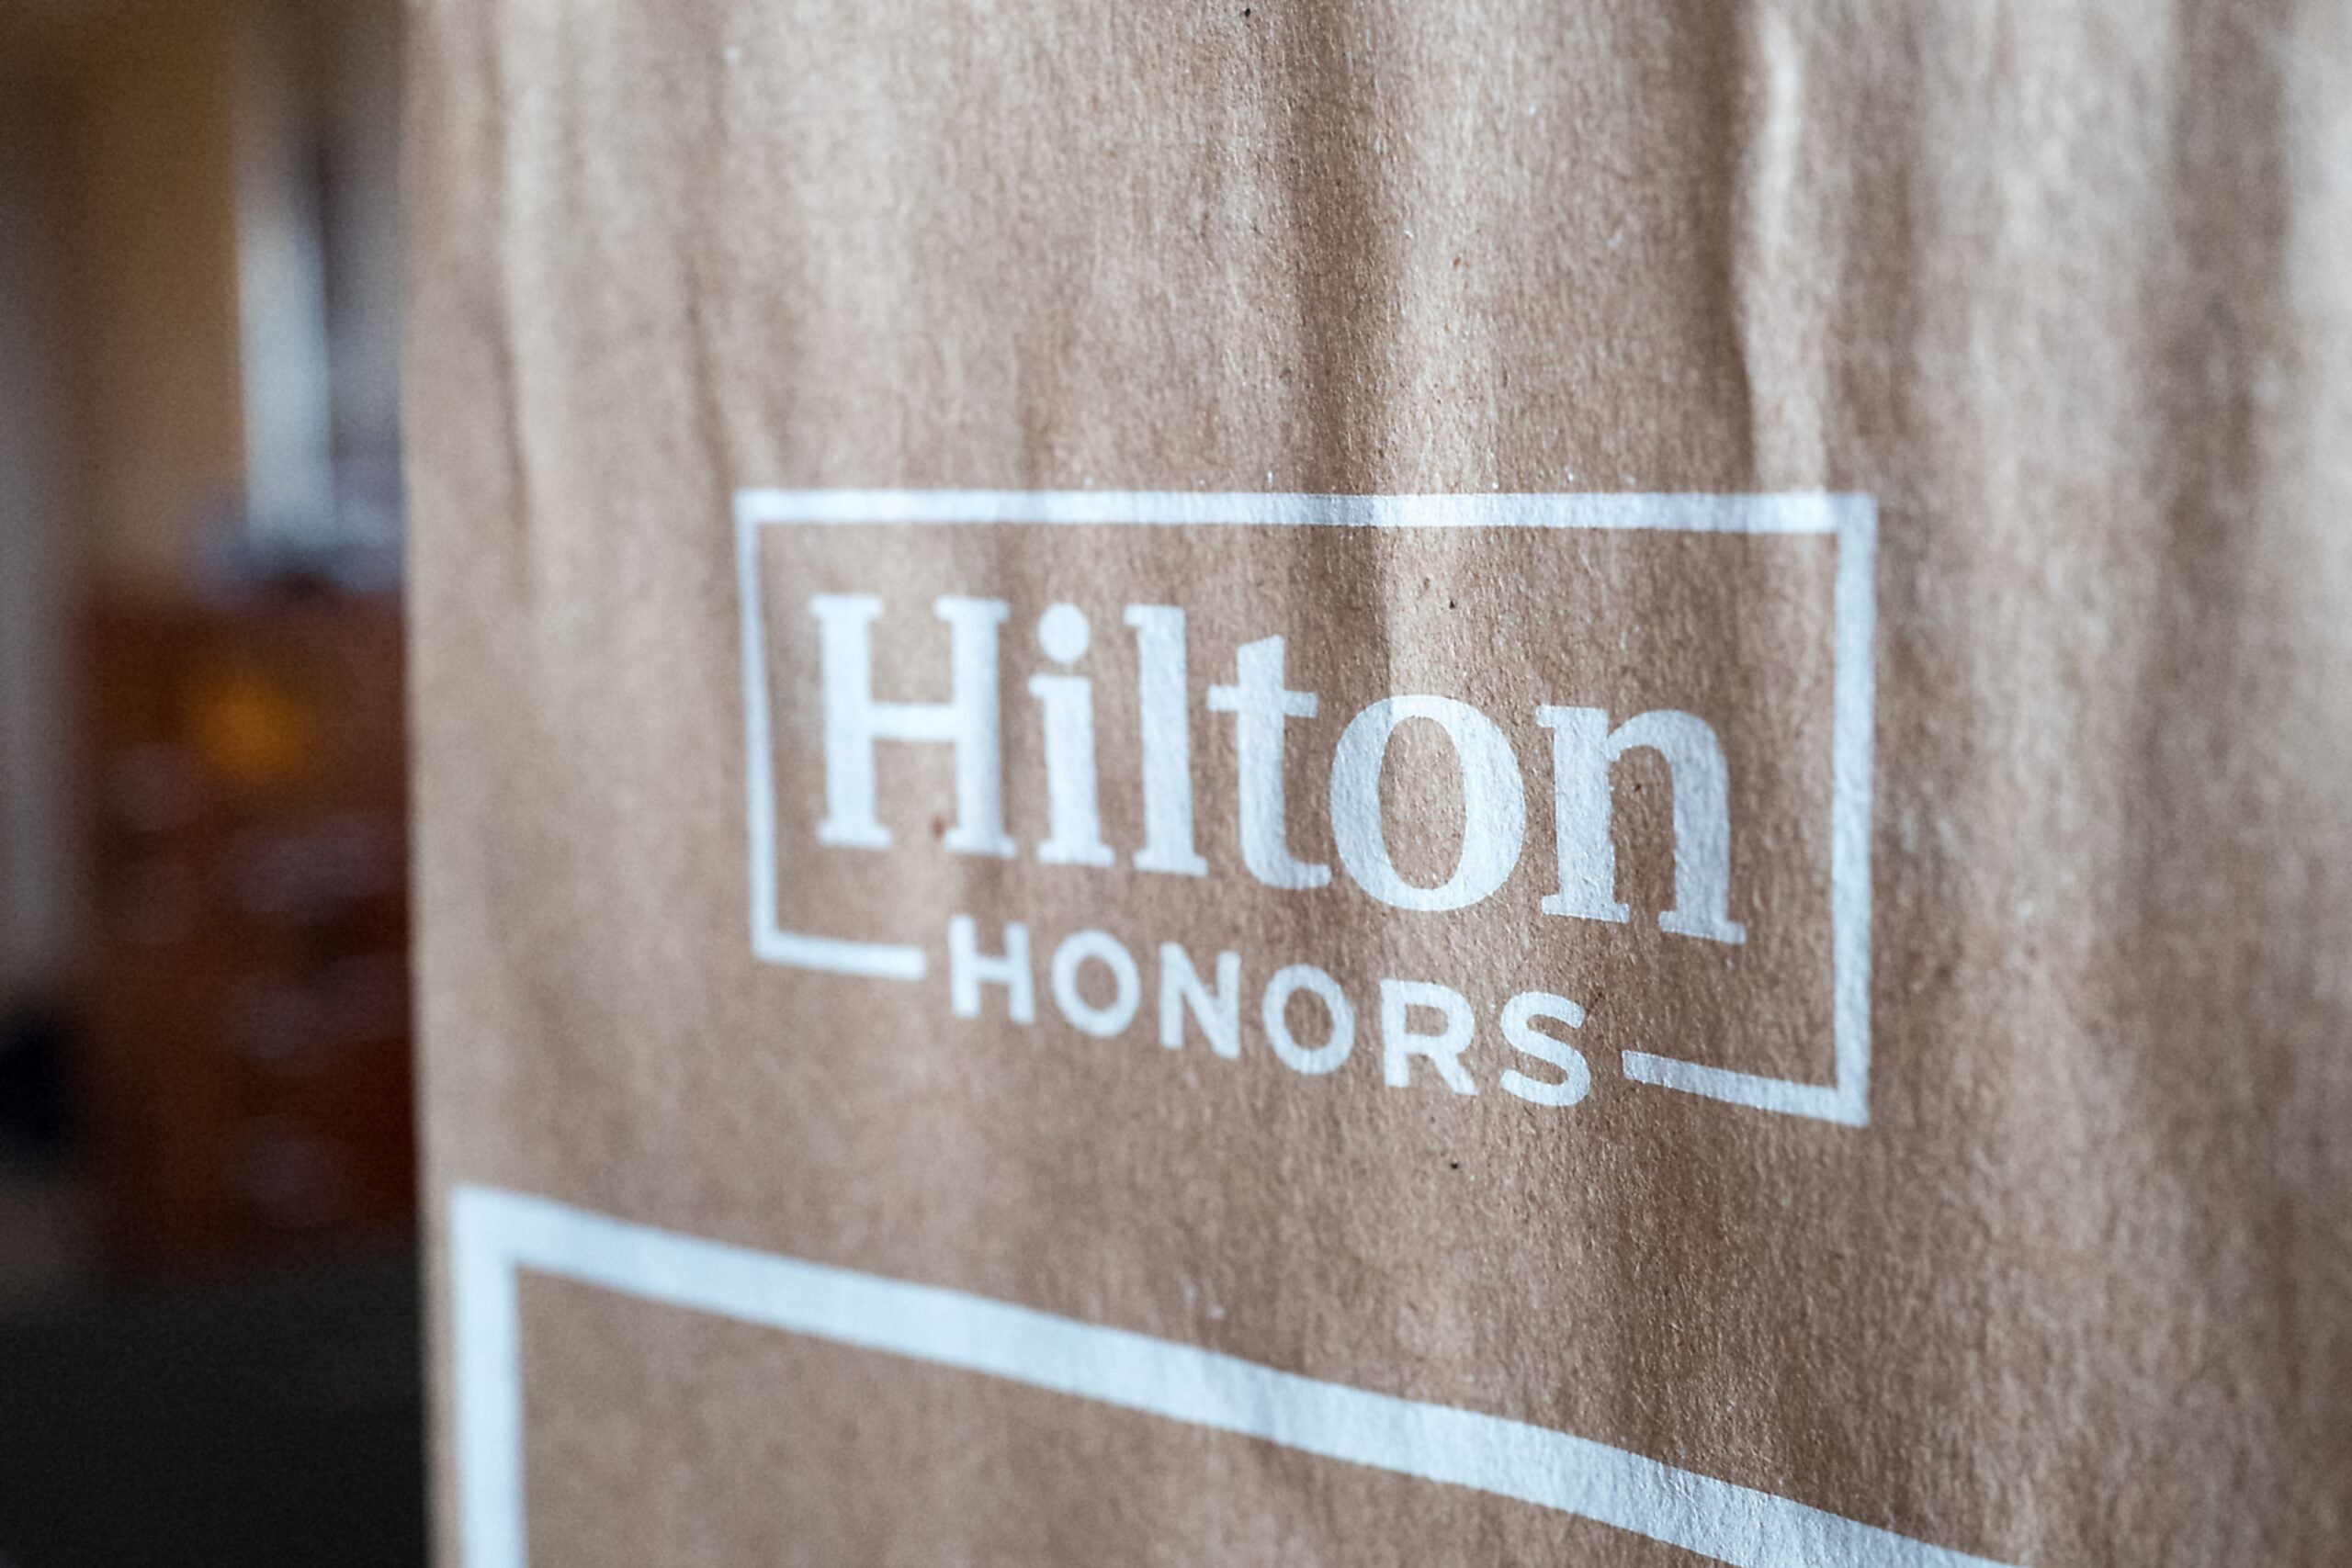 Hilton Honors logo on a bag